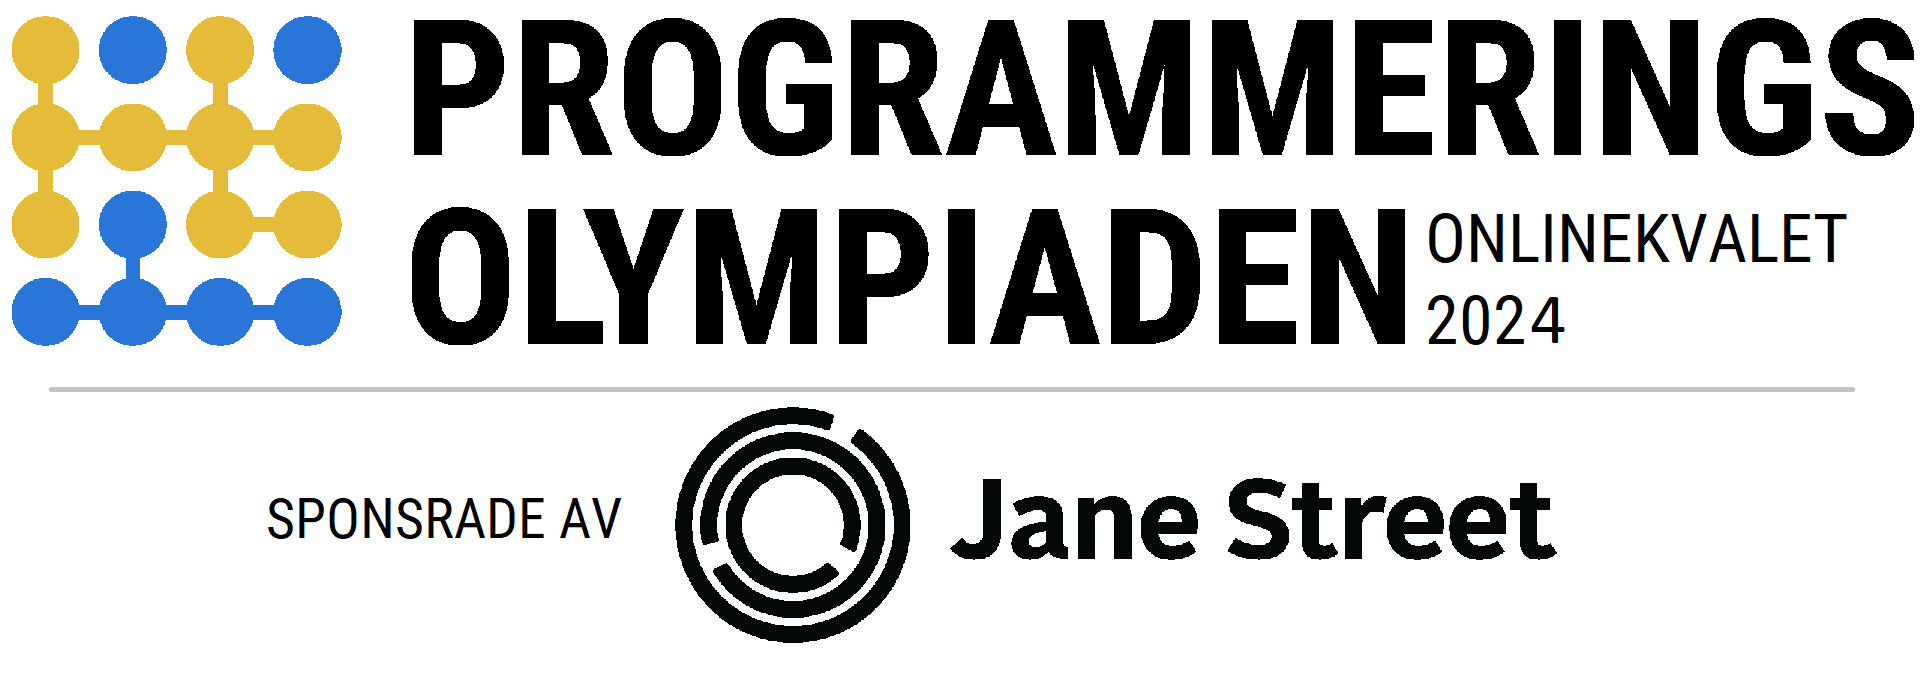 Programmeringsolympiadens Onlinekval 2024